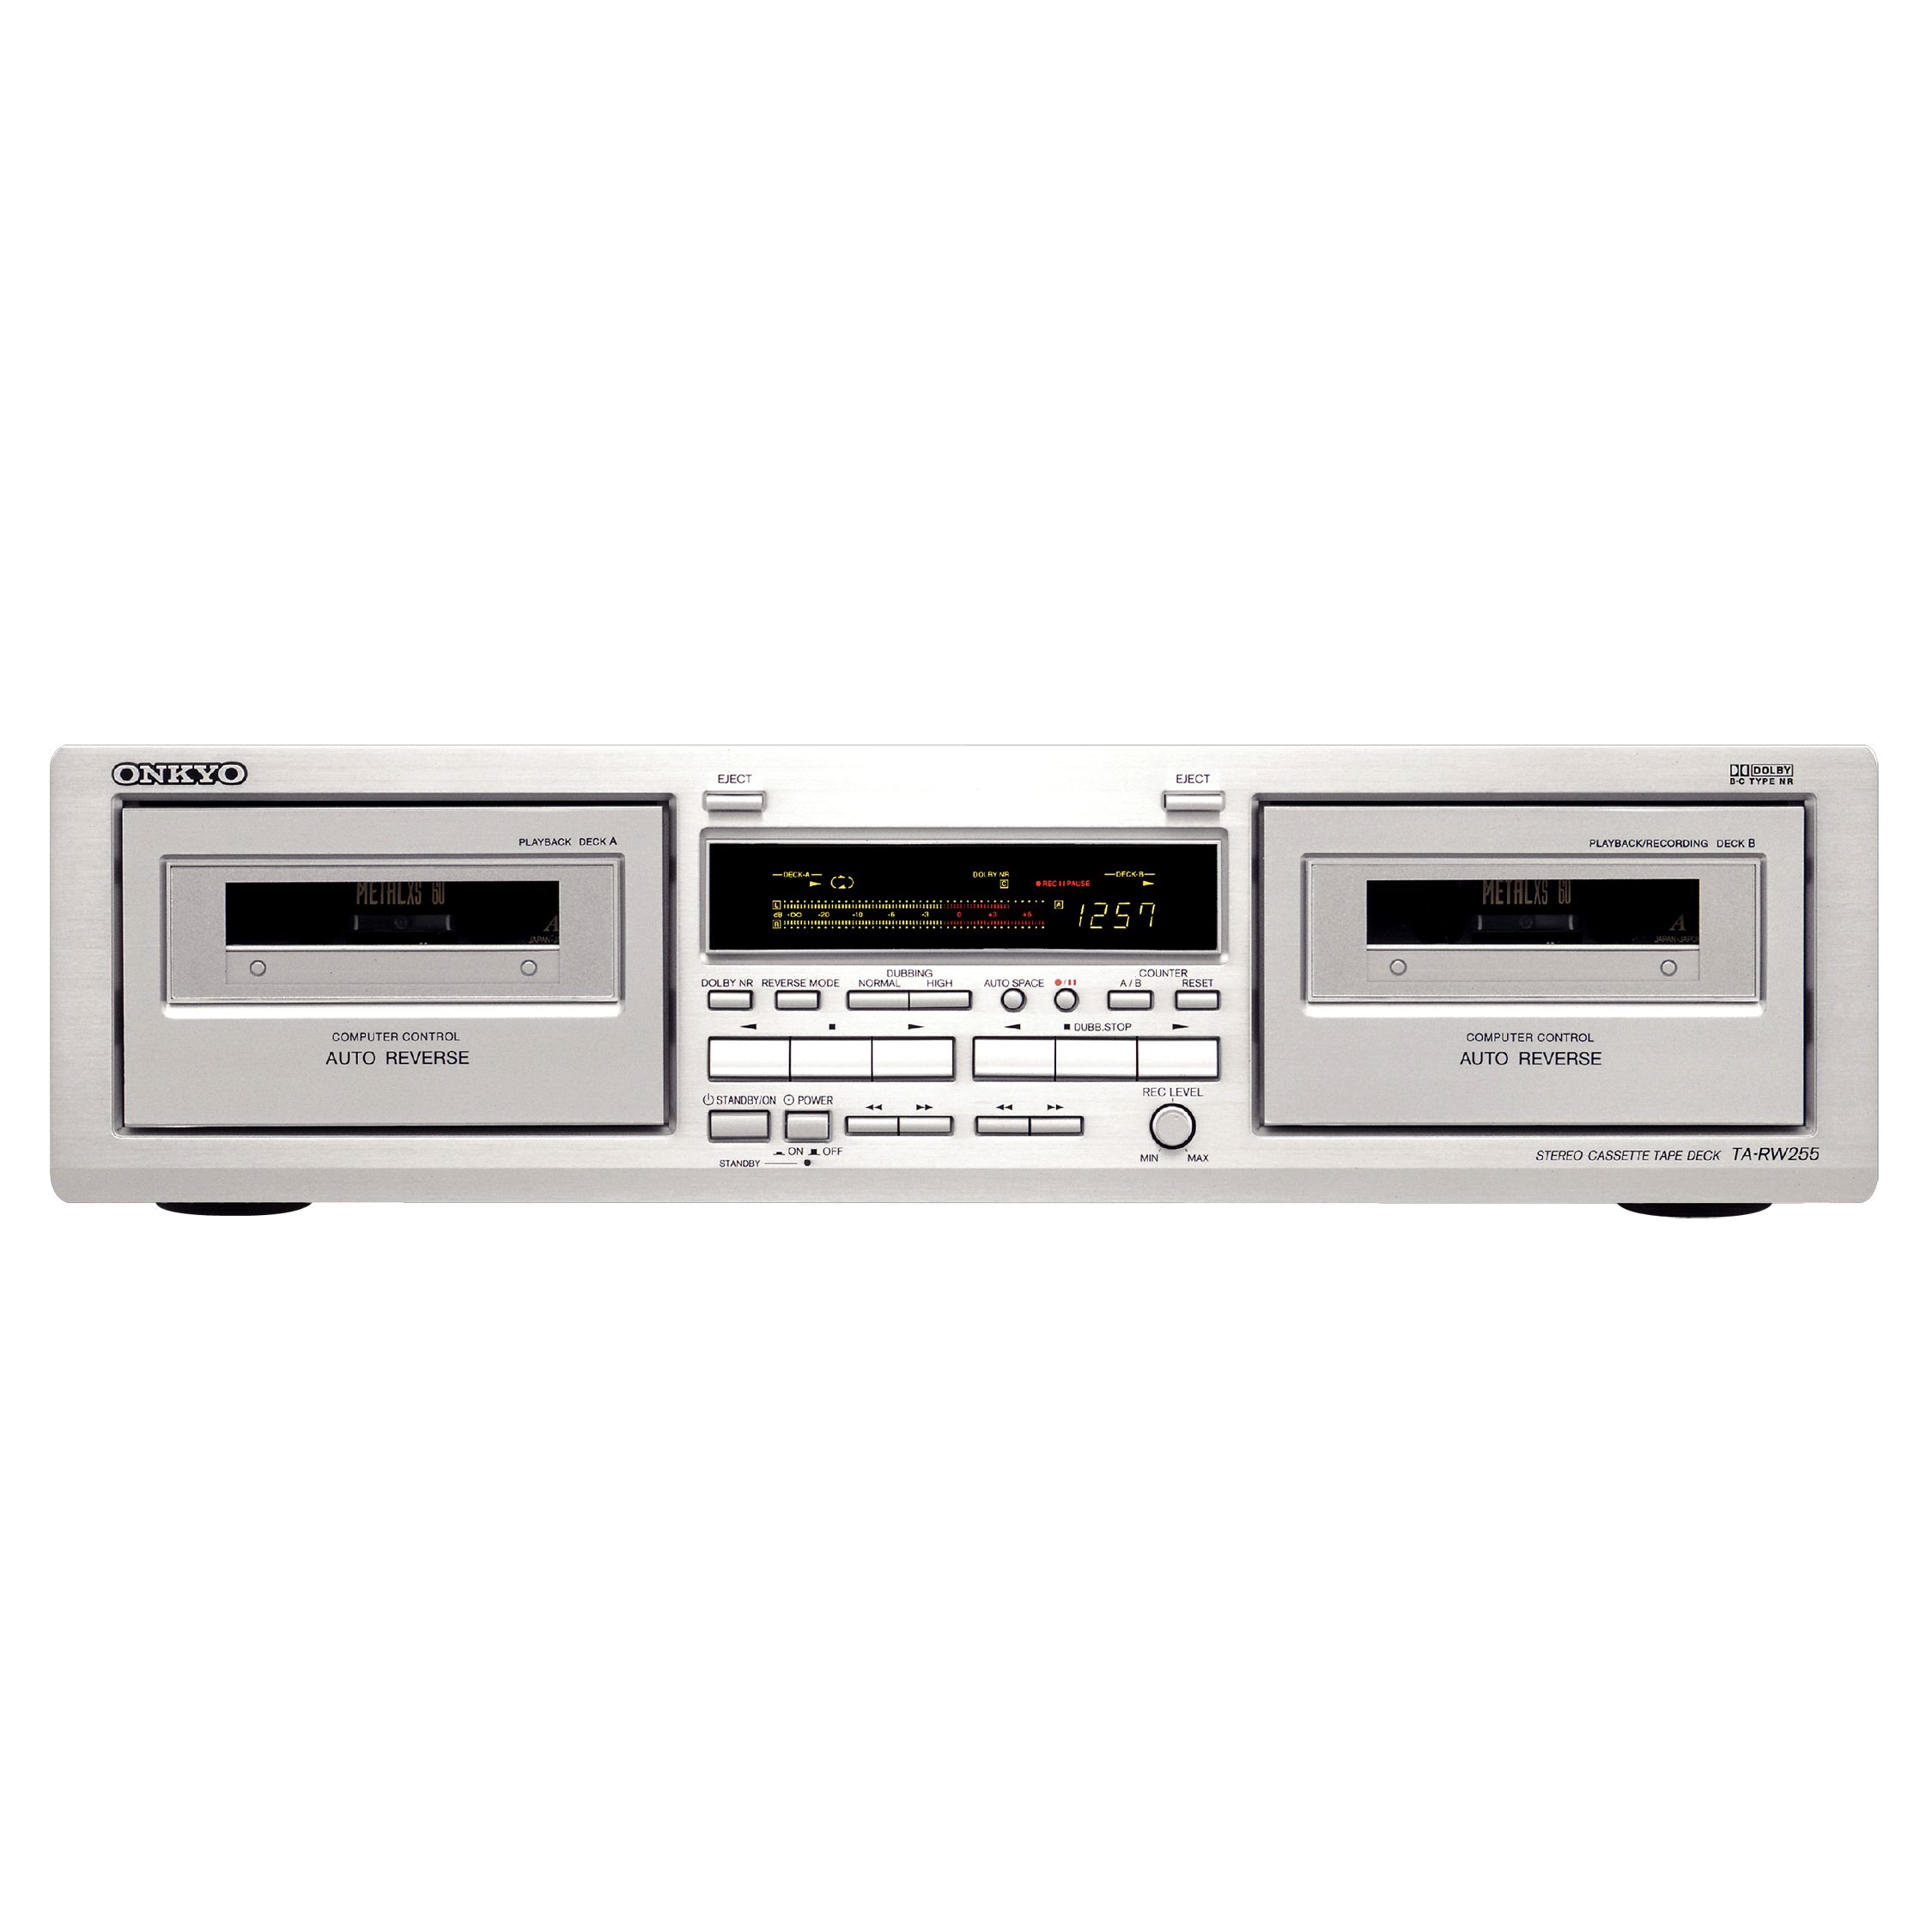 Onkyo TA-RW225S Double Cassette Deck, Silver at John Lewis